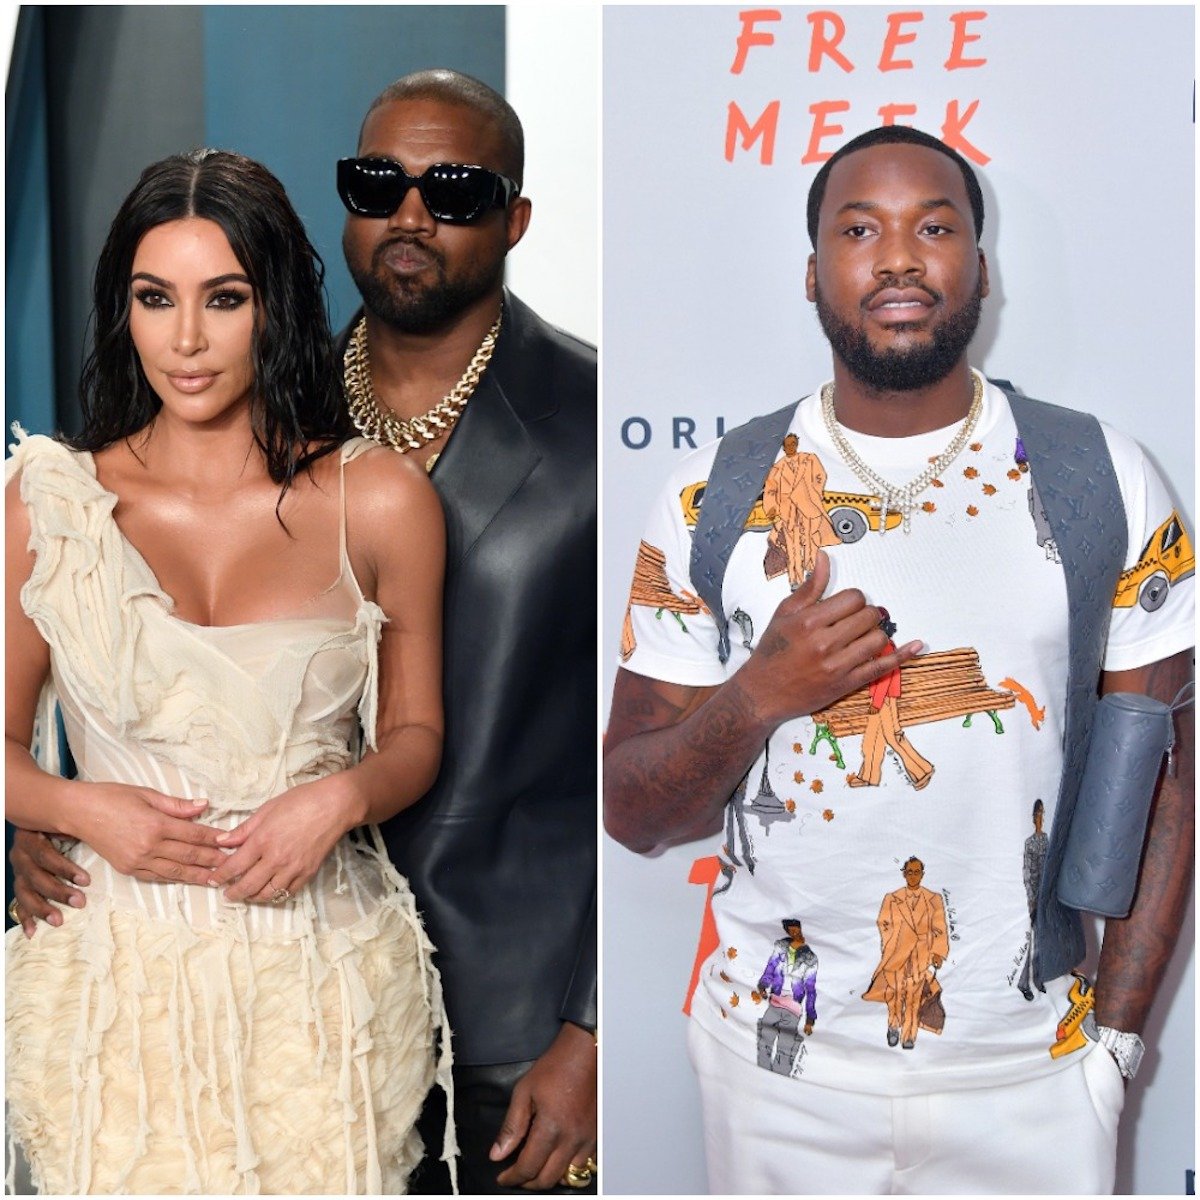 Kim Kardashian West, Kanye West, and Meek Mill